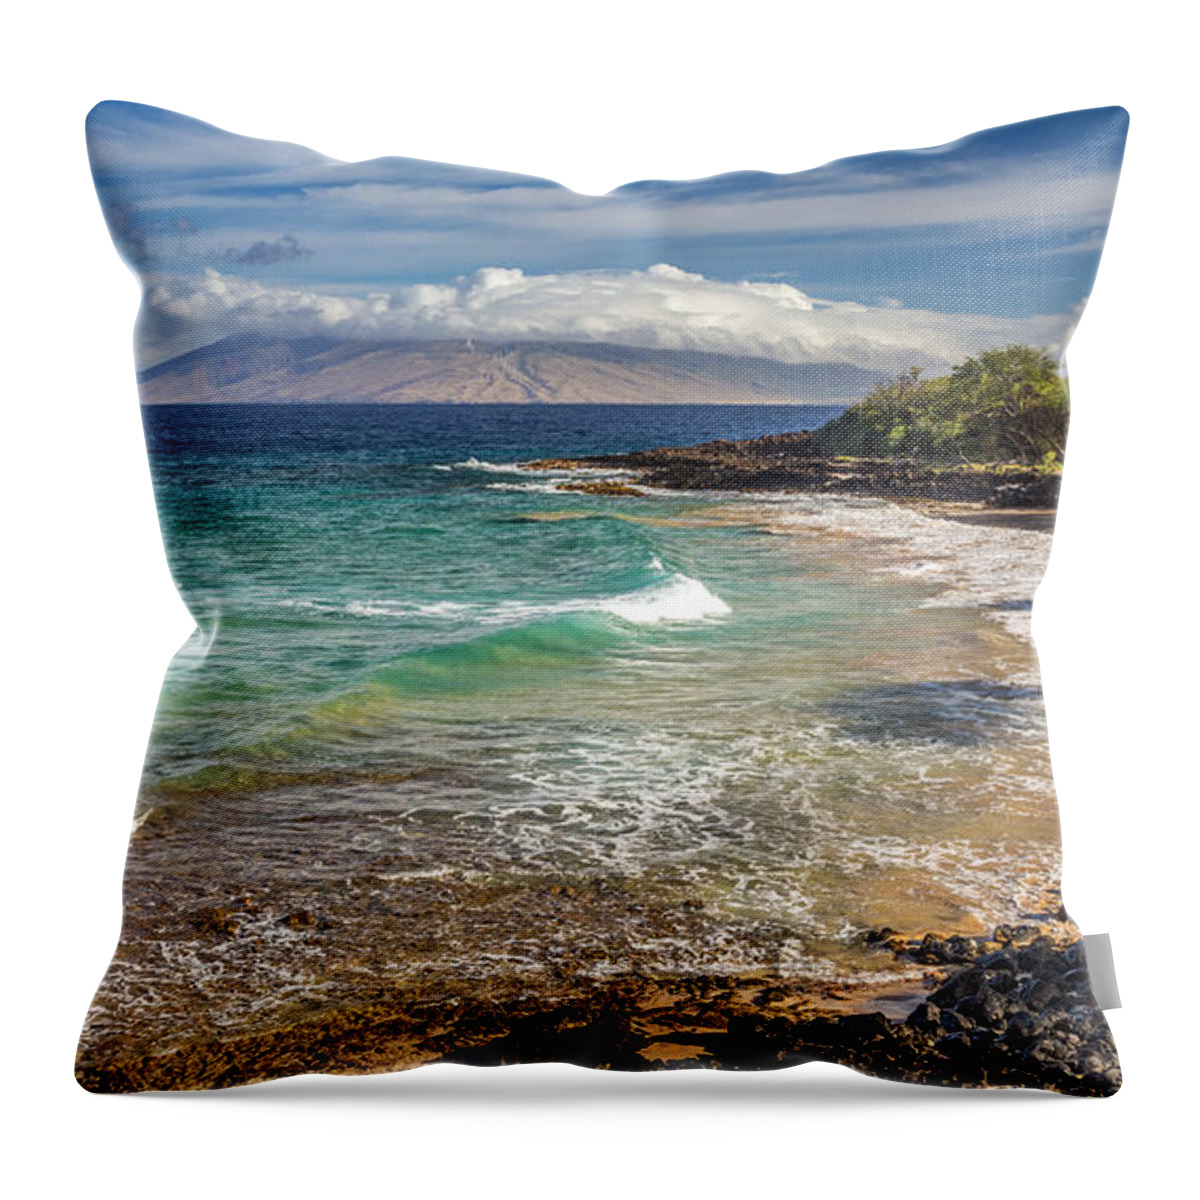 Little Beach Throw Pillow featuring the photograph Little Beach Maui Sunrise by Pierre Leclerc Photography